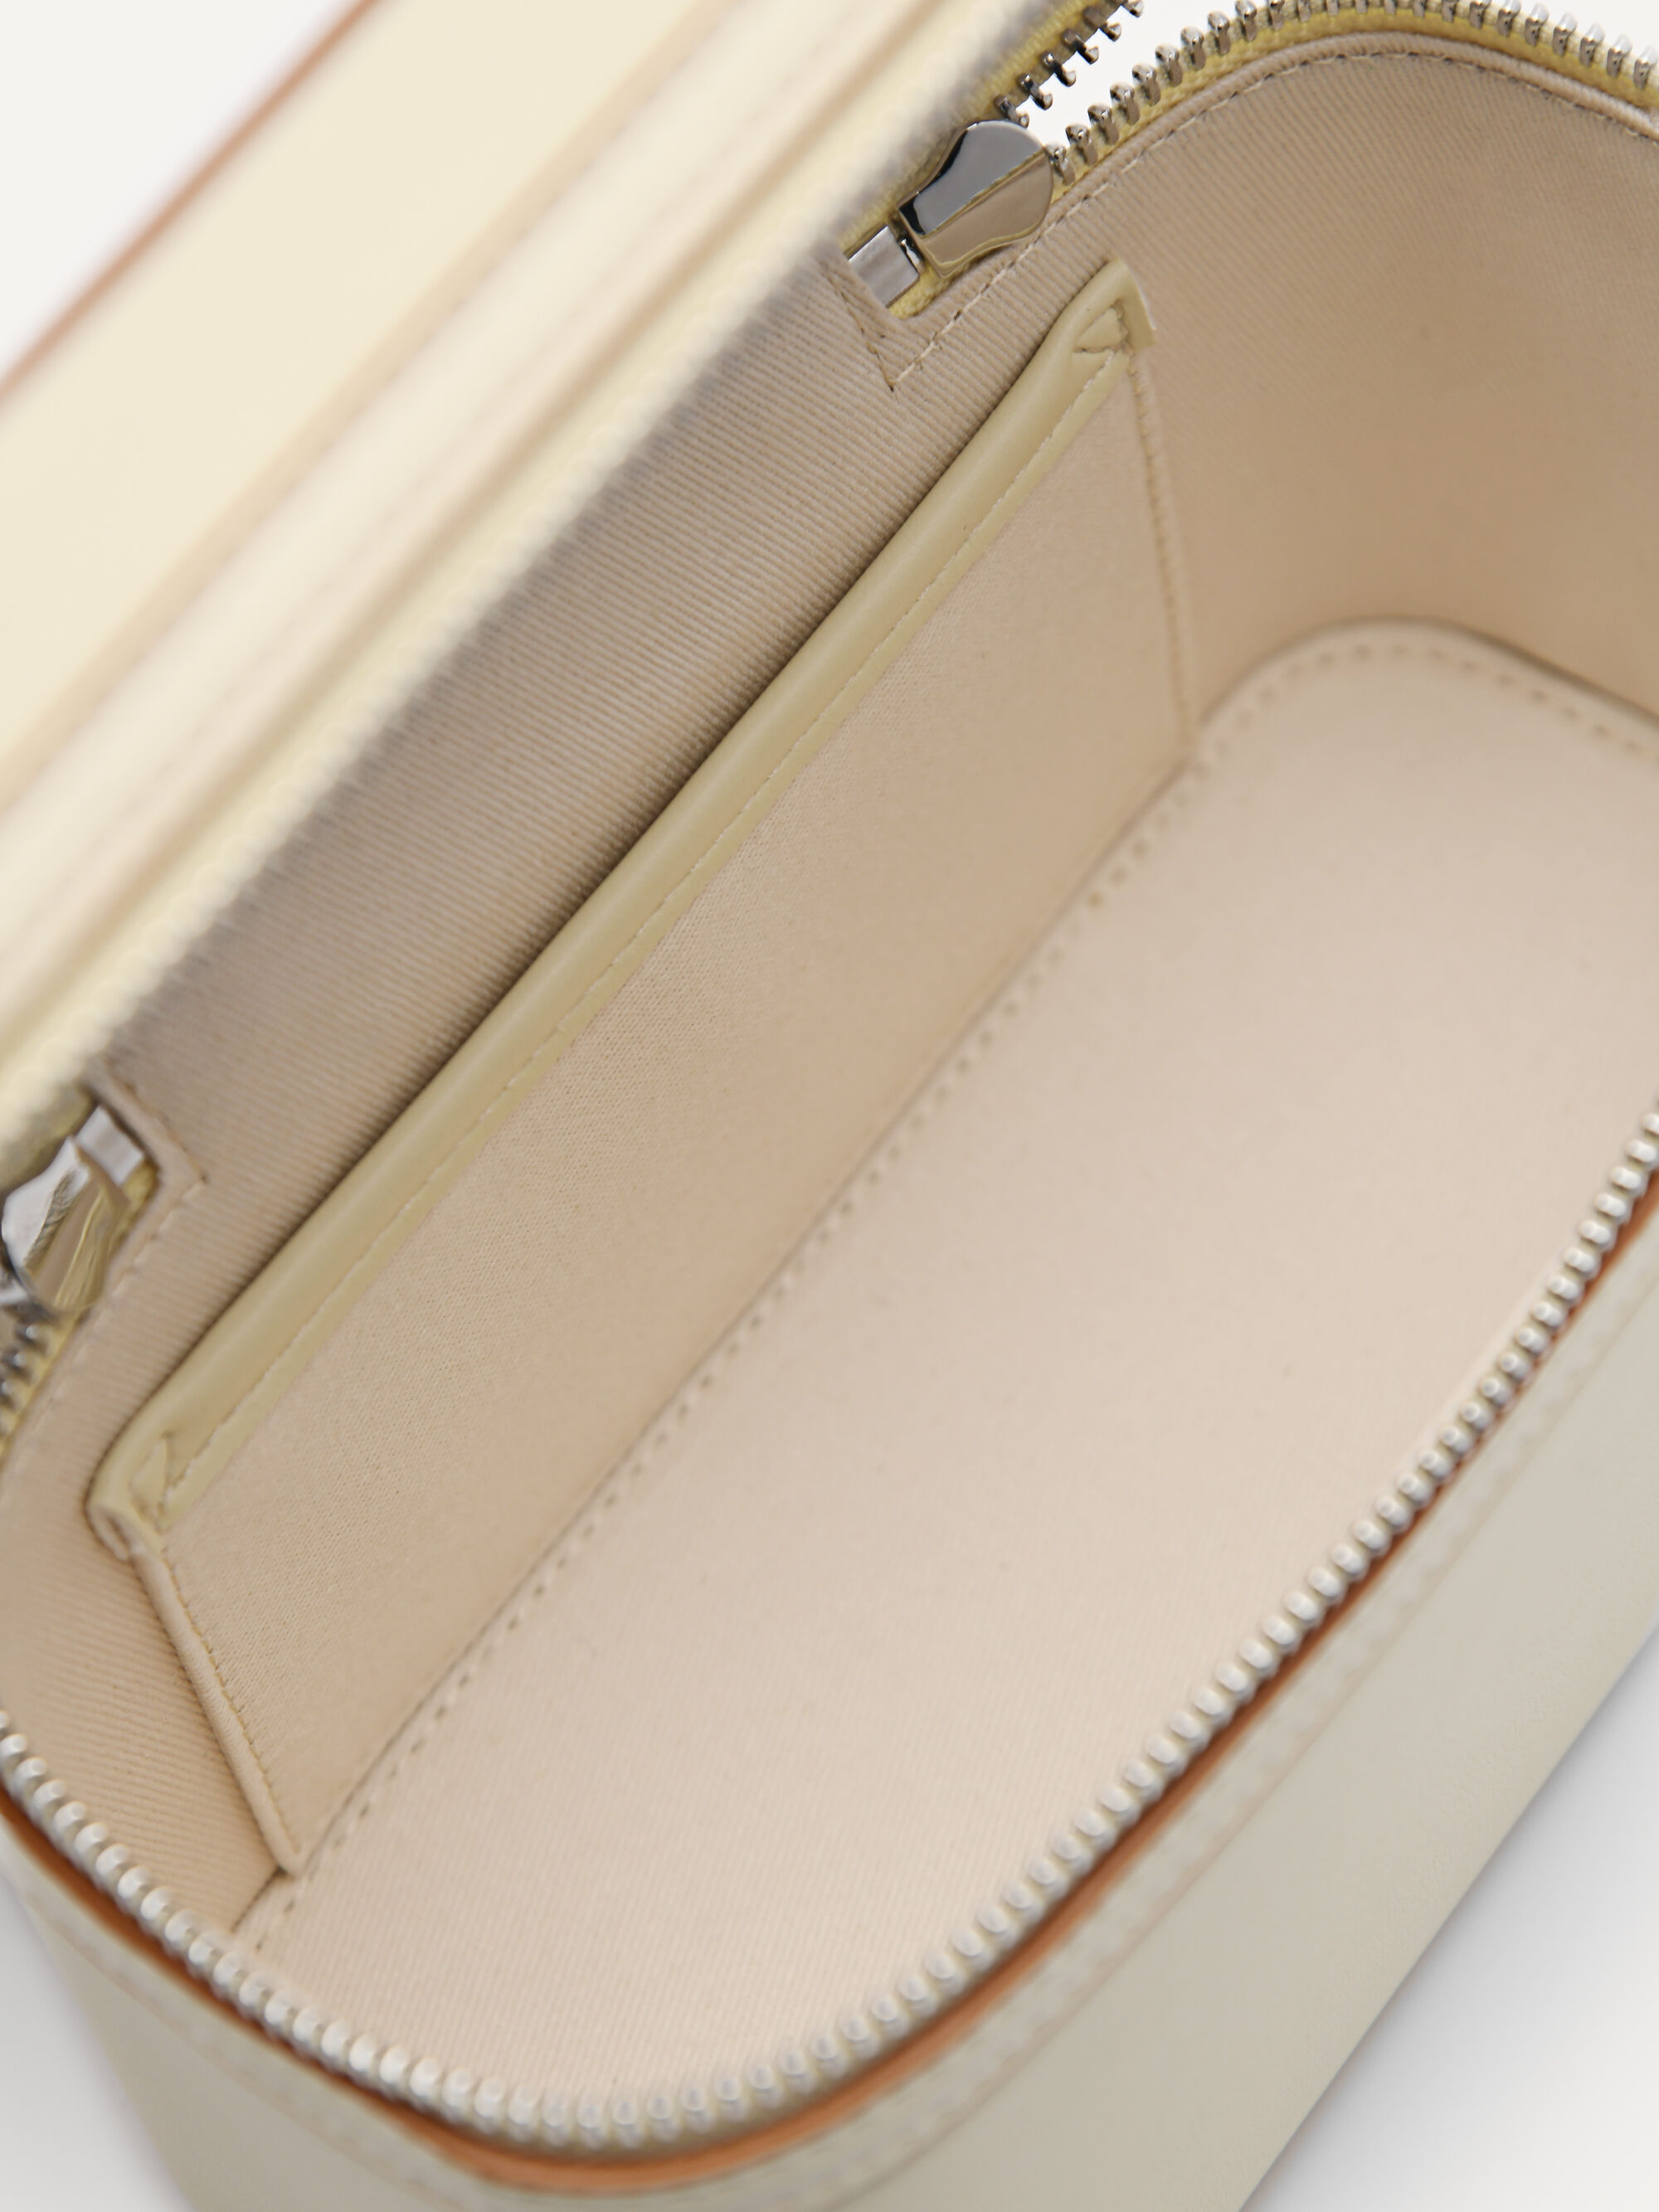 PEDRO Ari Boxy Shoulder Bag Size: W19 x H13.5 x D8.5 cm Colors